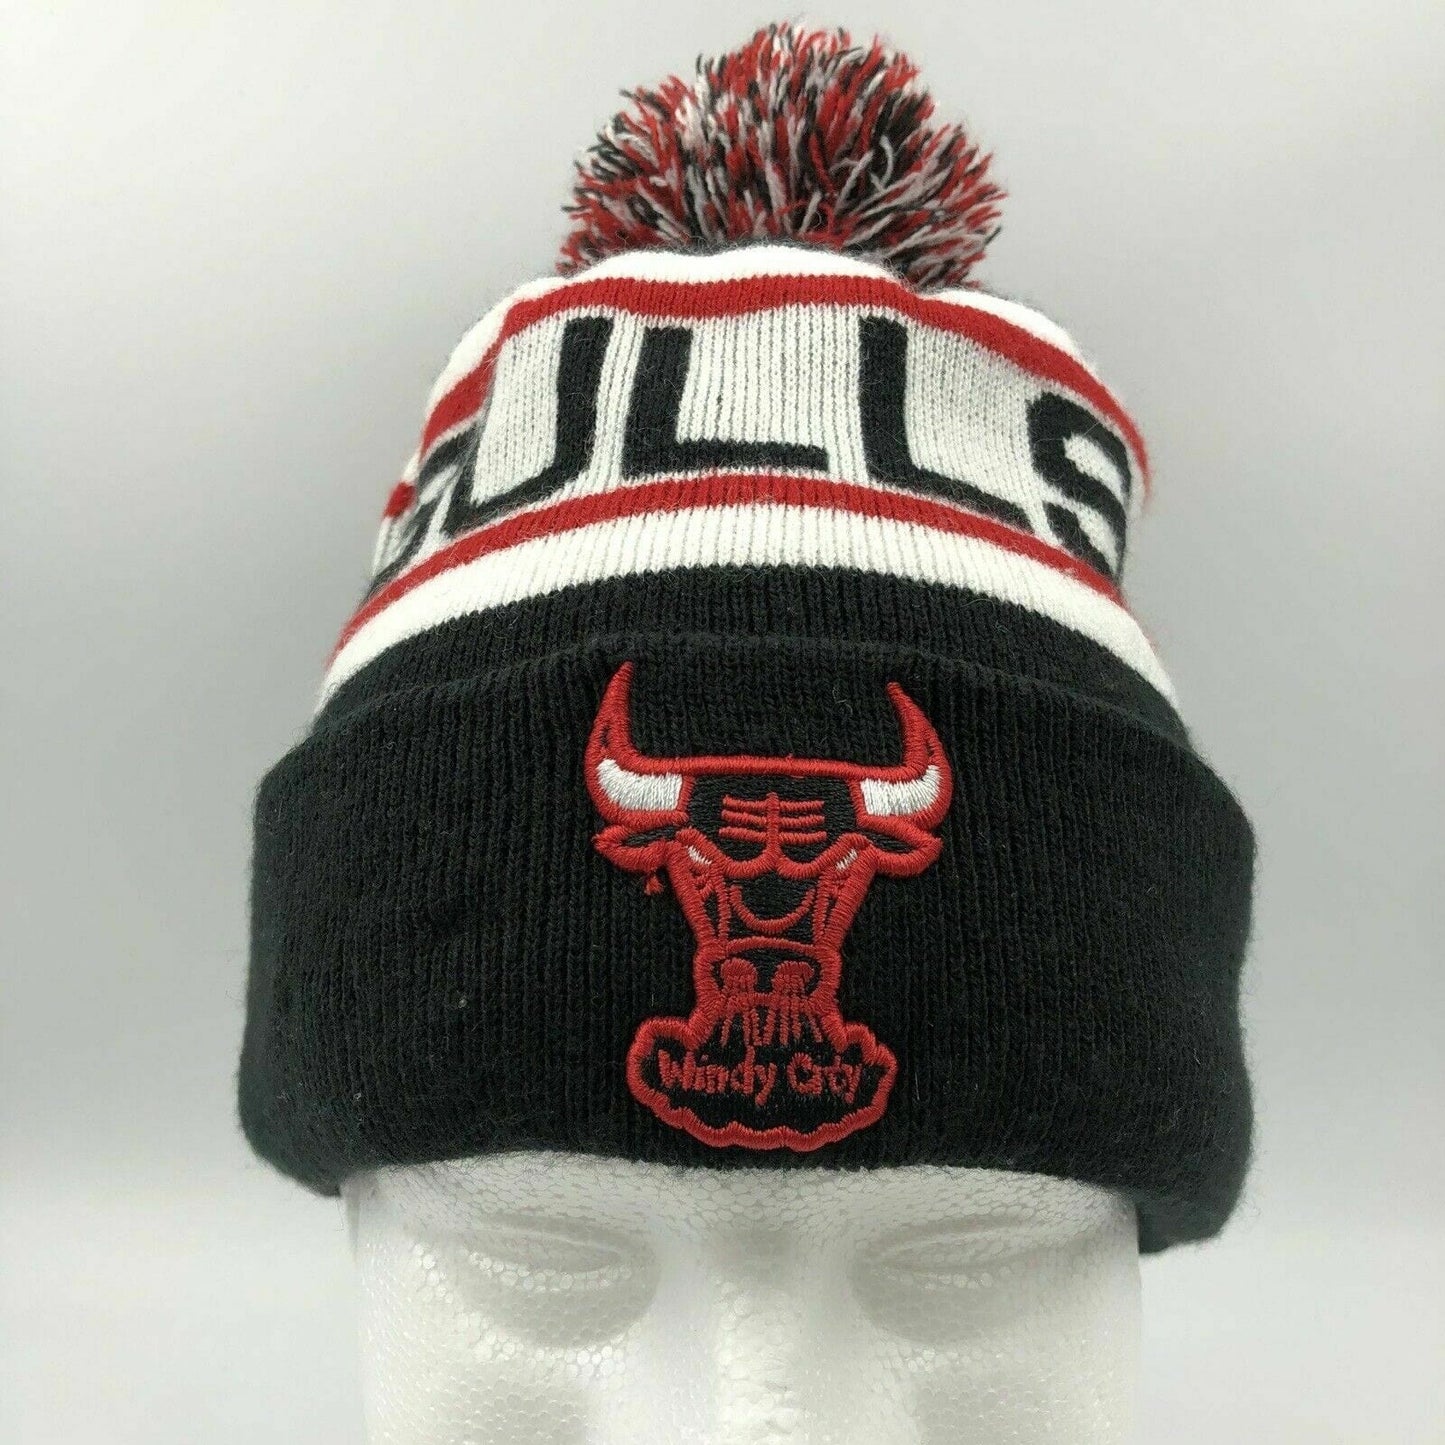 Stylish Bulls New Era Hardwood Classics Beanie Hat Cap Red White Black Logo "Windy City" - Very Good - Mens - Chic